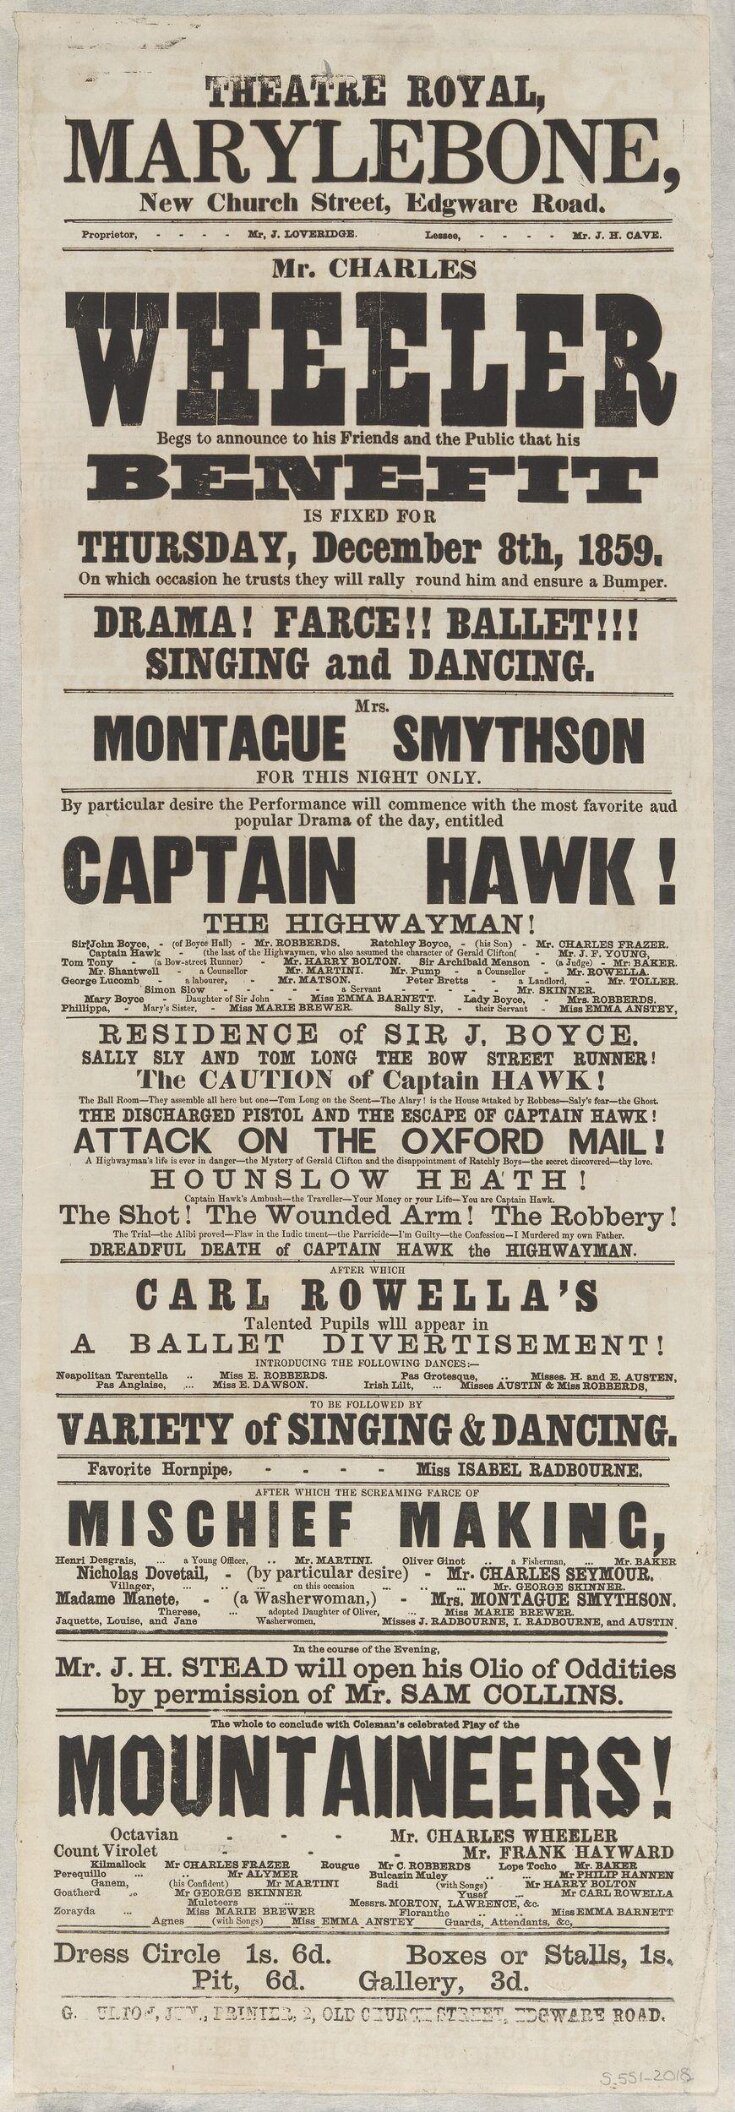 Captain Hawk! The Highwayman top image